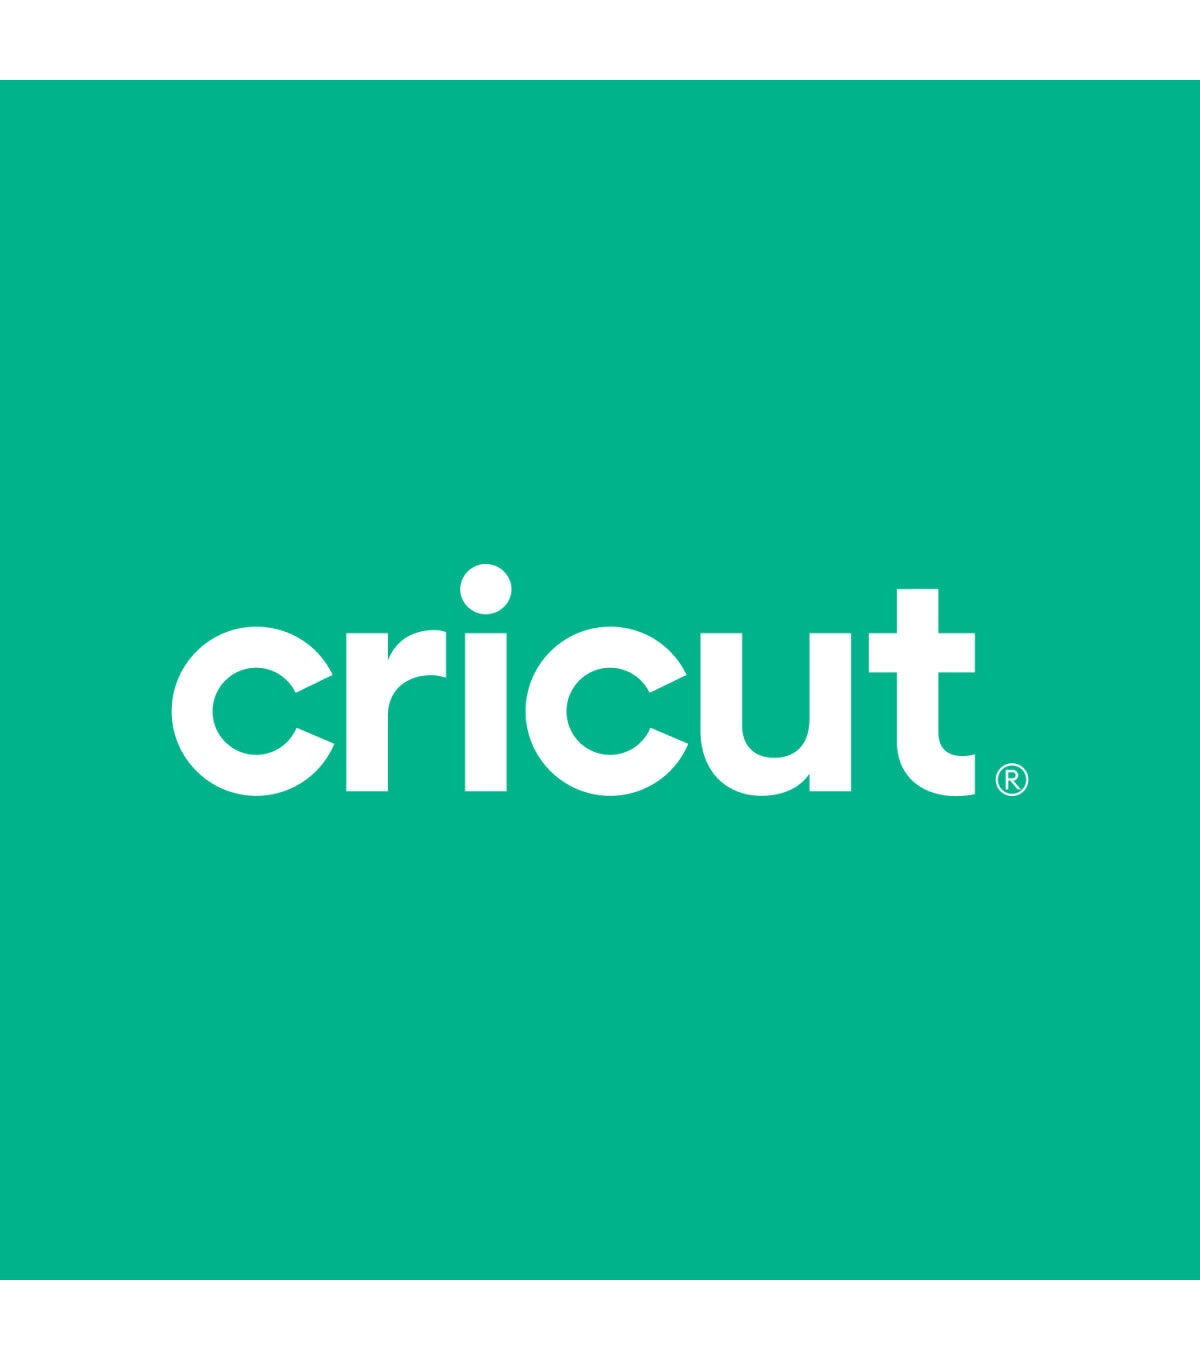 Cricut Joy Xtra Smart Cutting Machine Value Starter Bundle